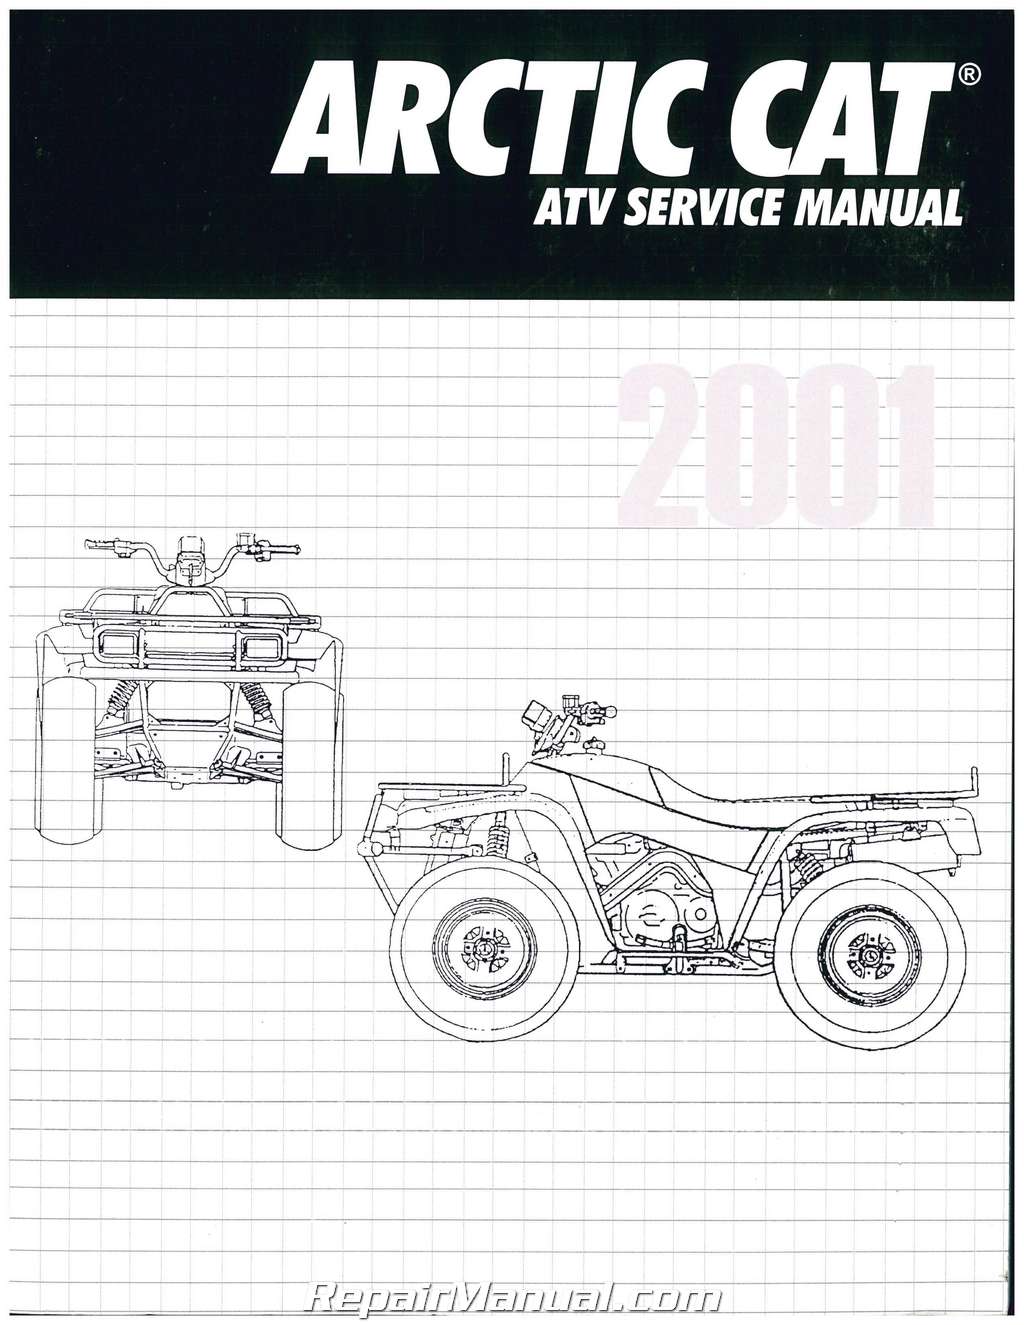 2001 arctic cat atv owners manual